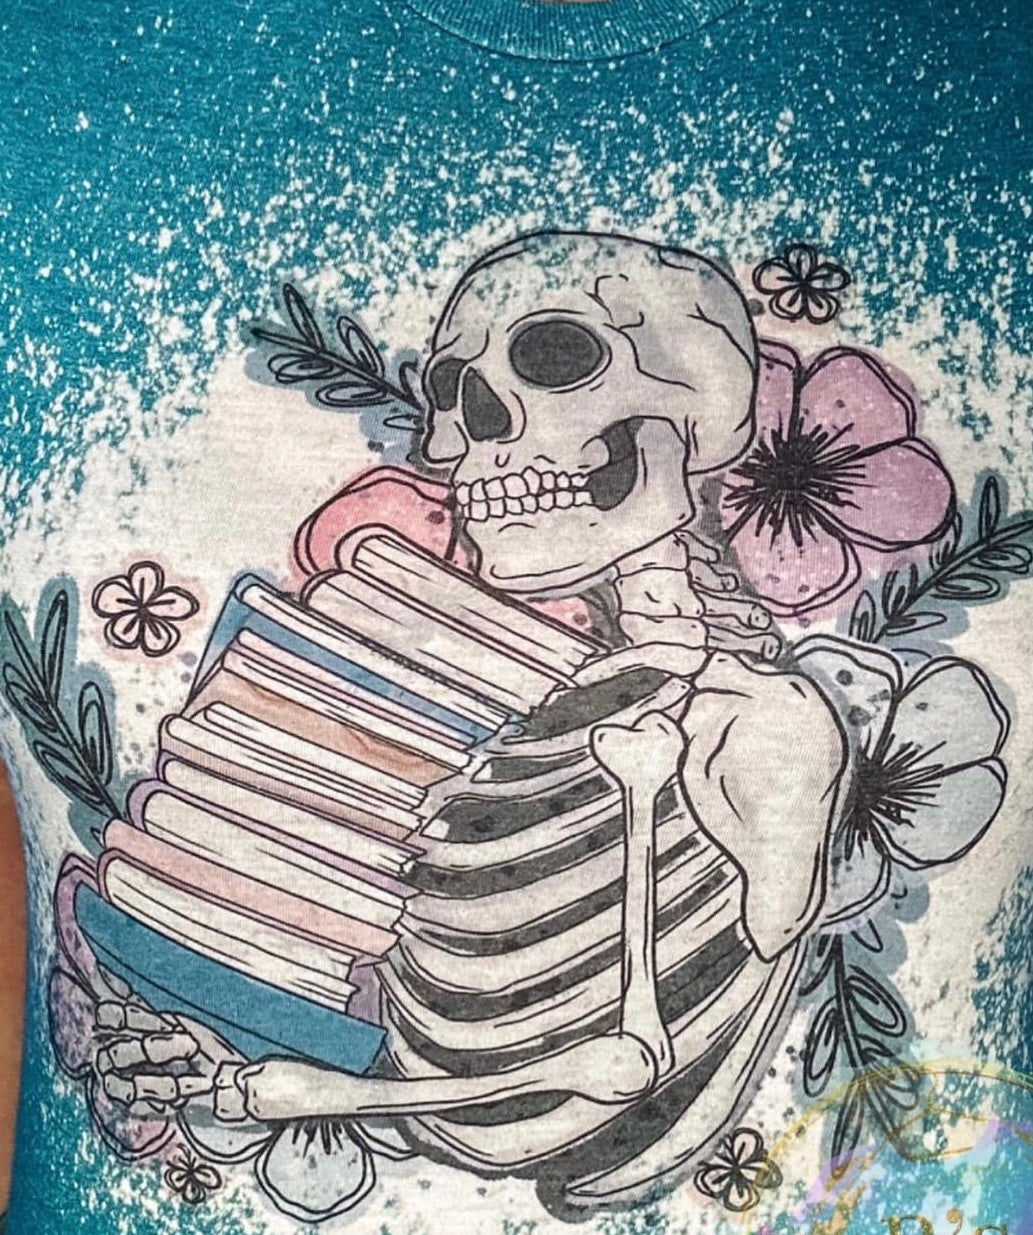 Skeleton book lover